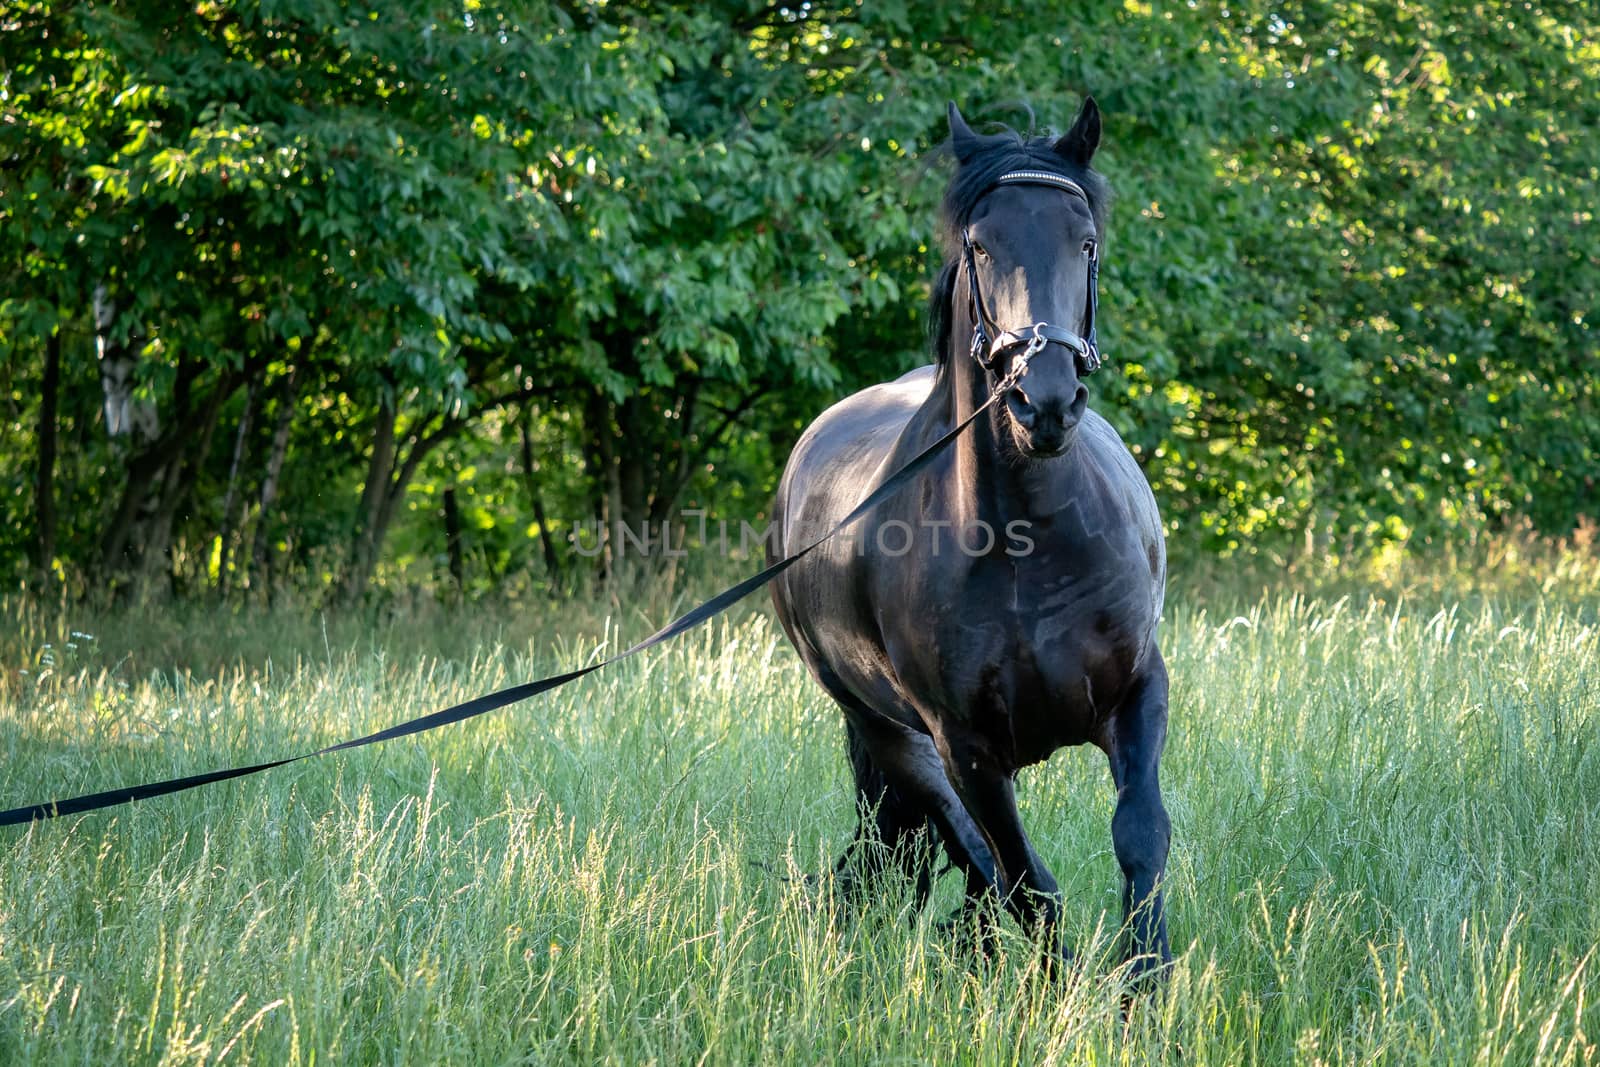 Black Friesian horse runs gallop in grass. Friesian horse running on halter. 
Rare breed of horses